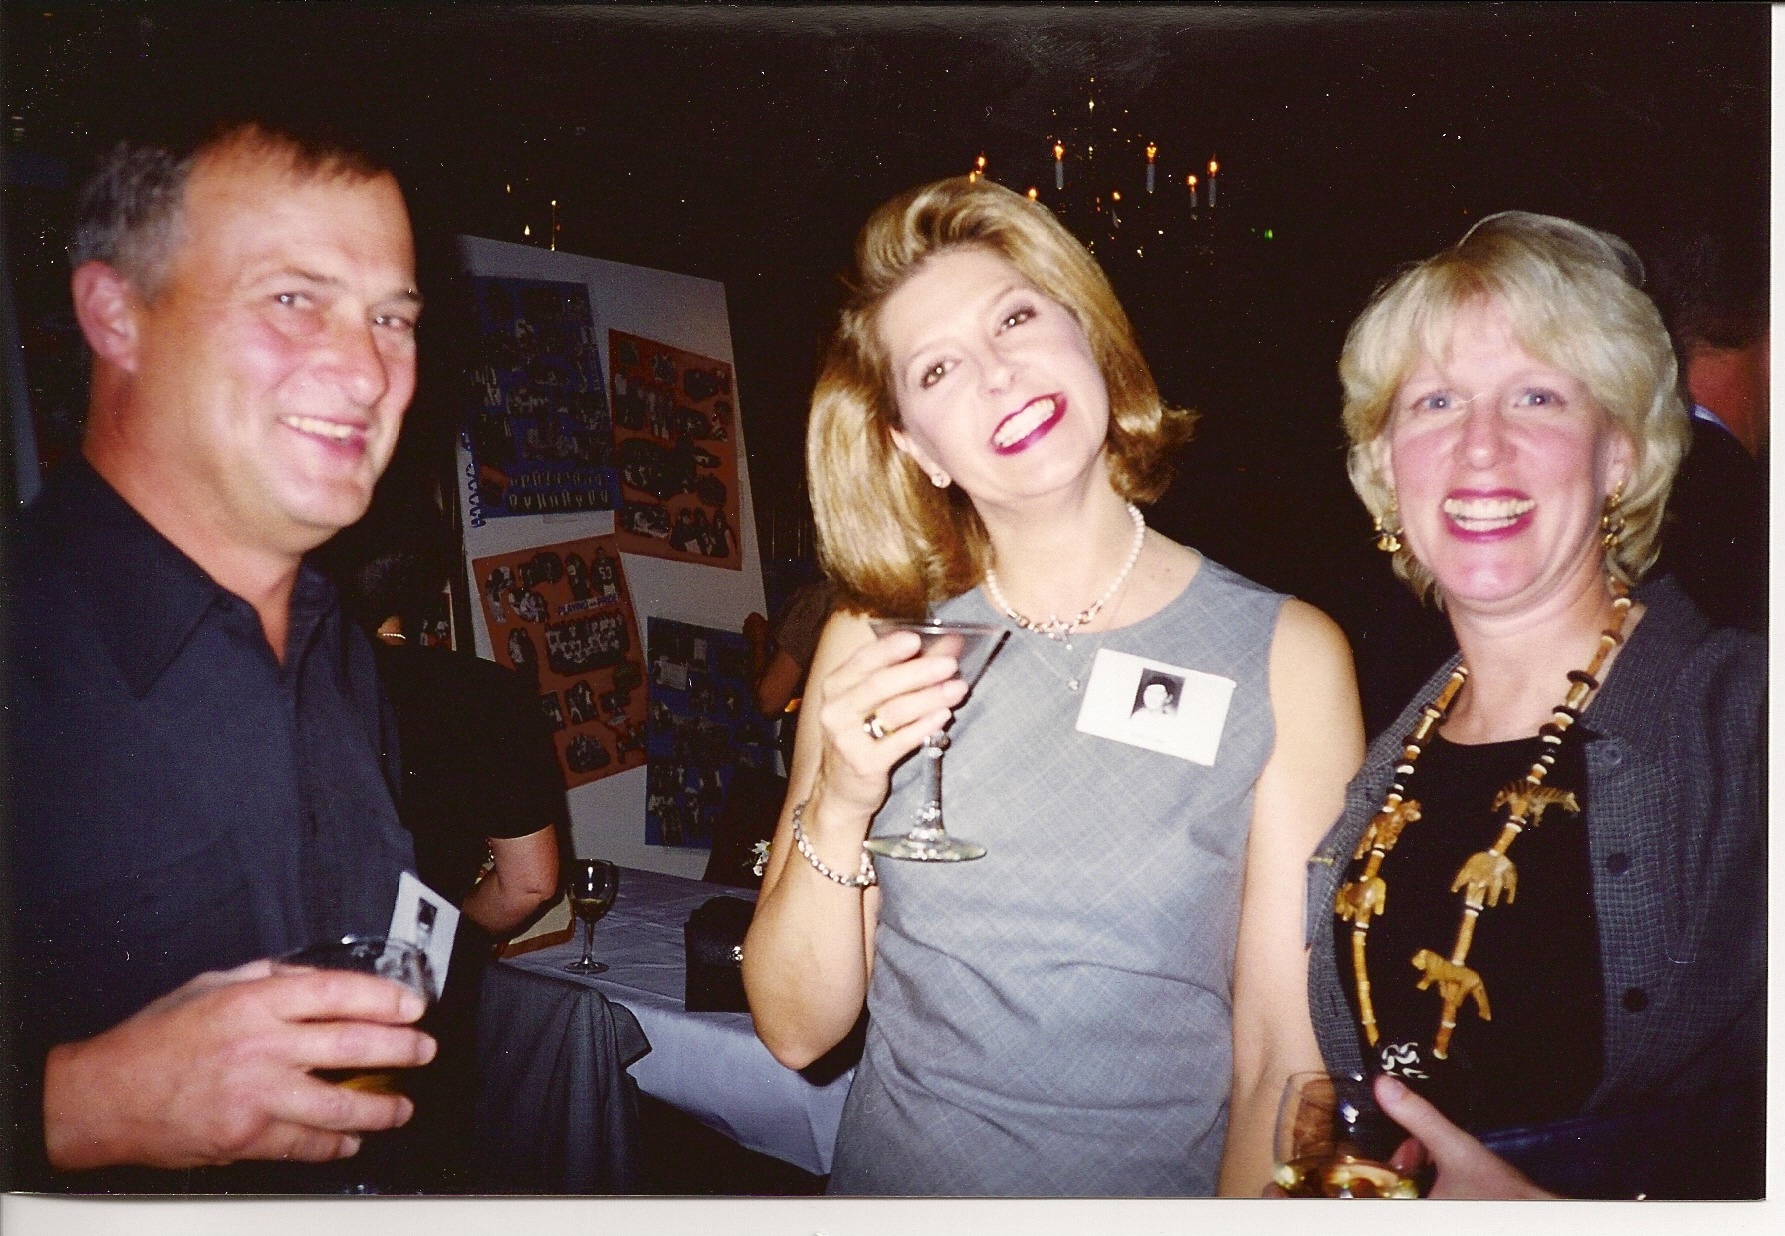 Charlie, Gail, Becky
1999